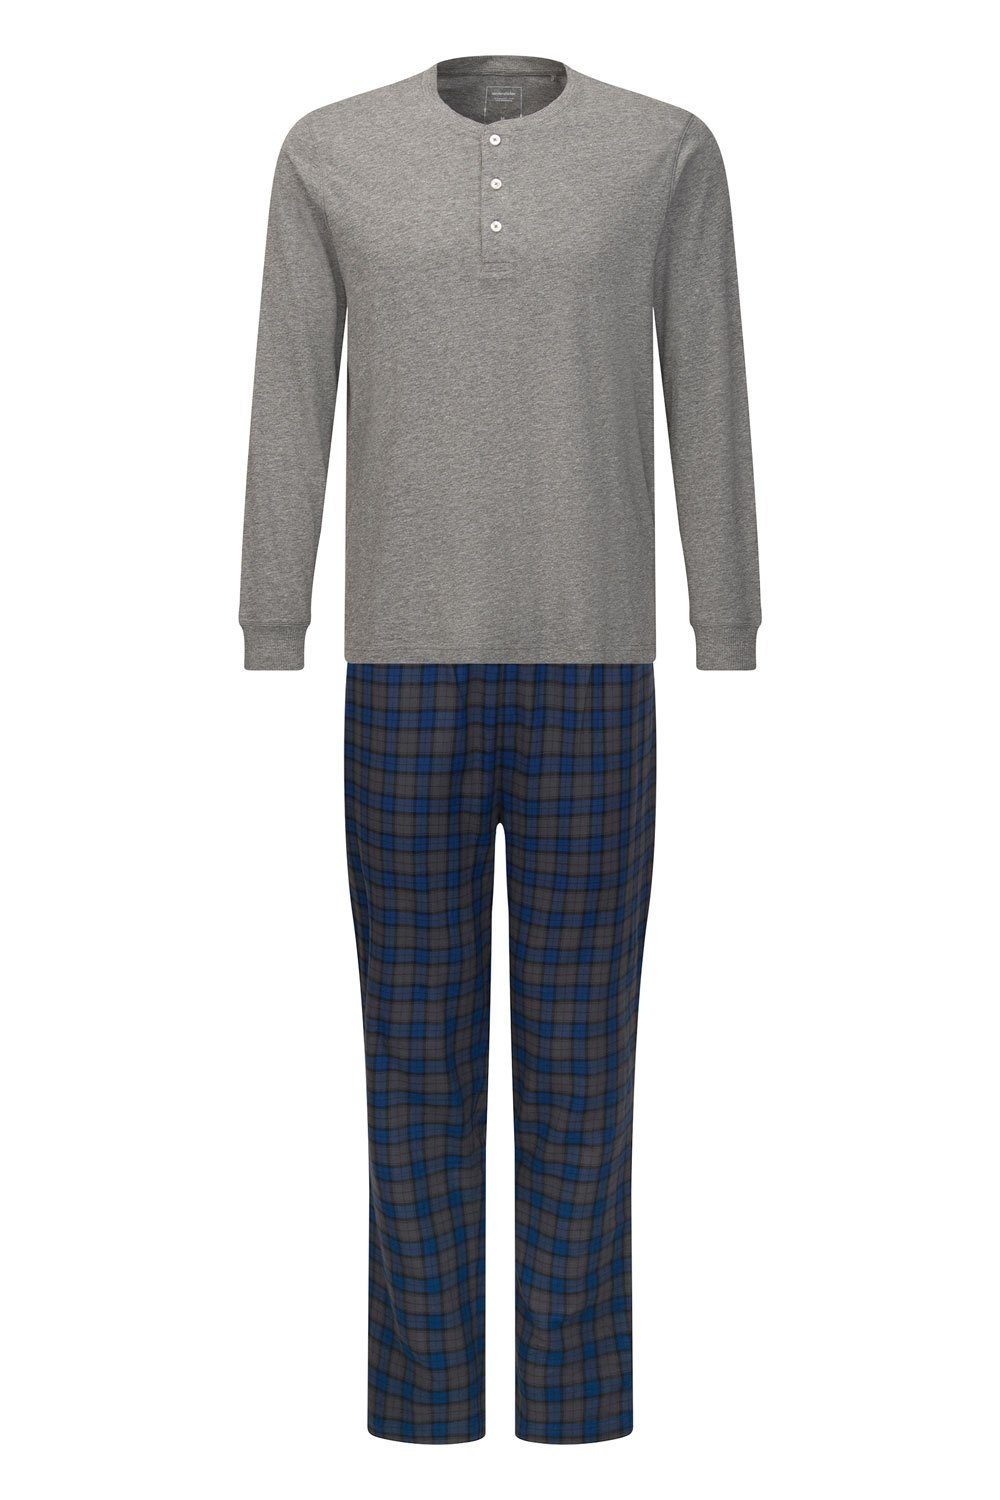 seidensticker Pyjama Pyjama Mix & Match 100006 grey/navy olive check